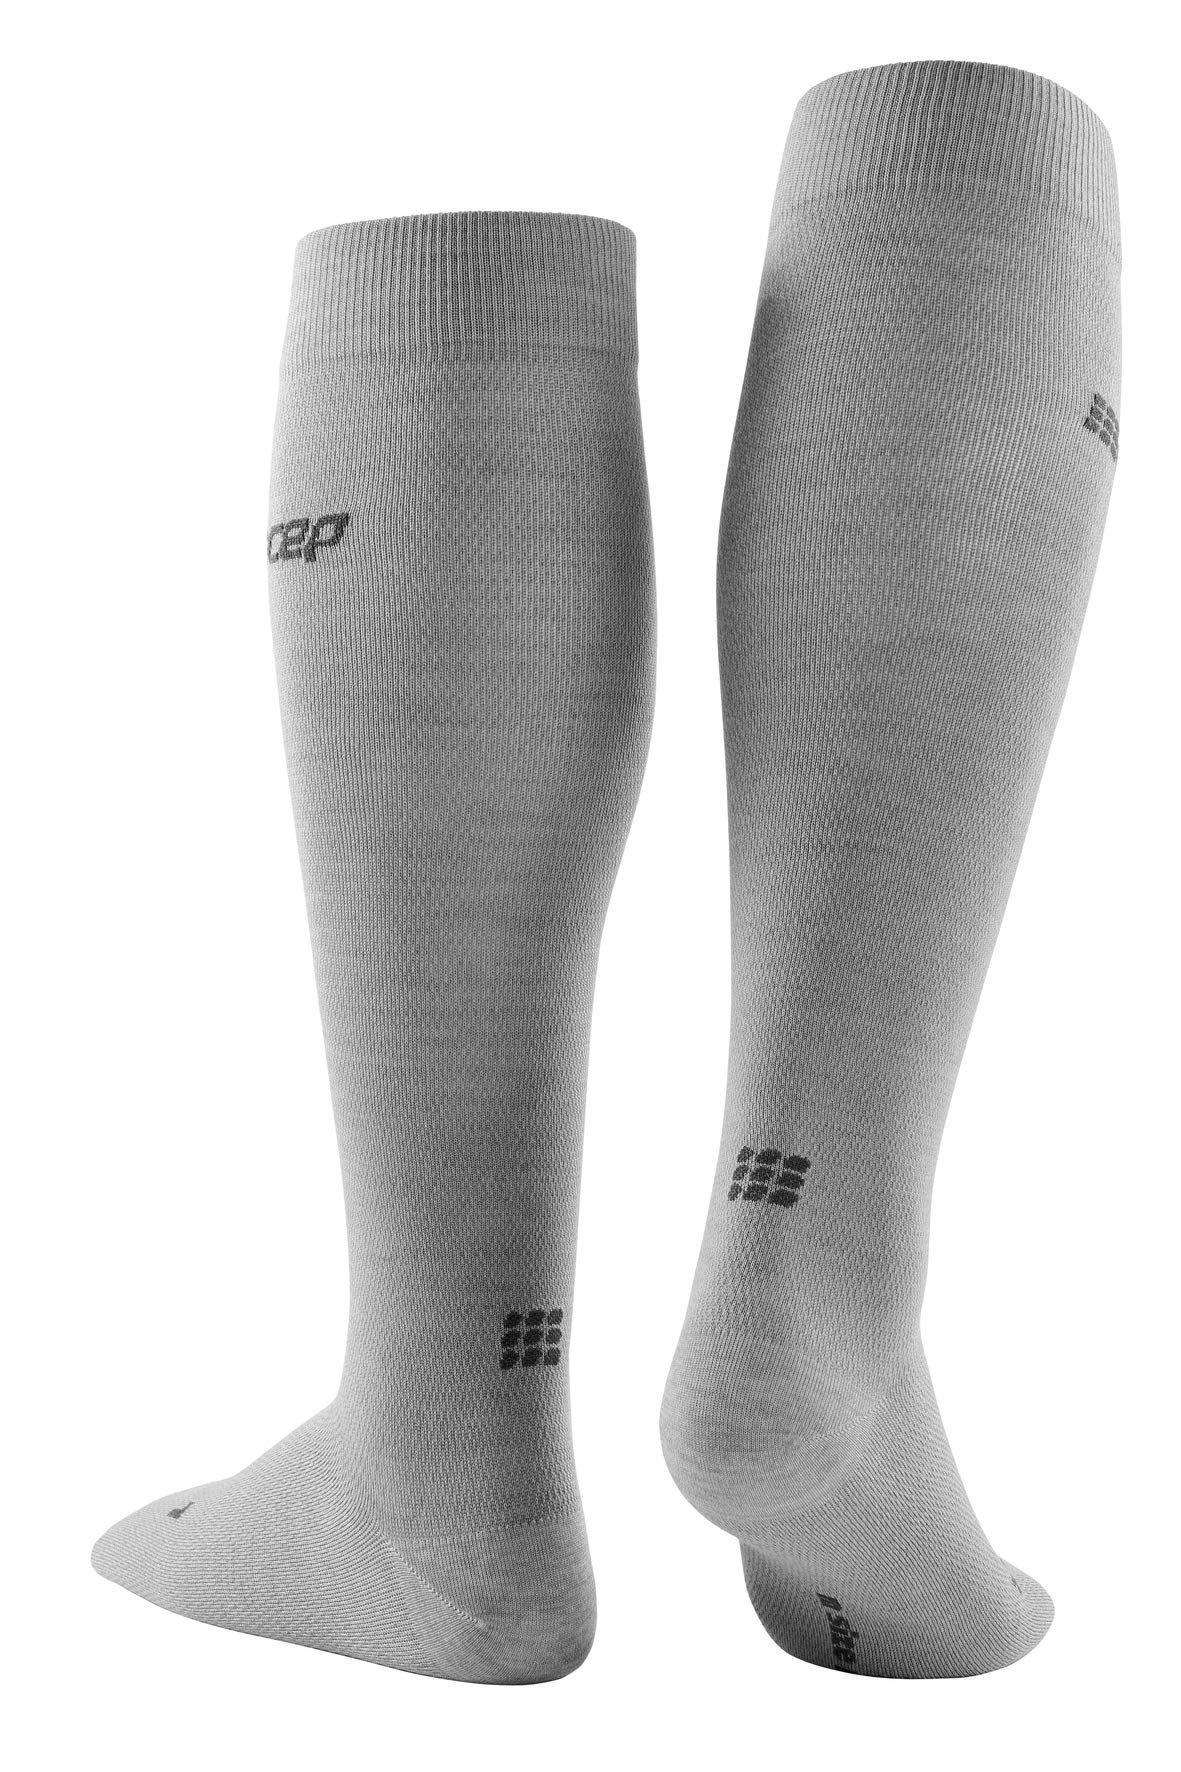 CEP Women's AllDay Merino Wool Tall Socks